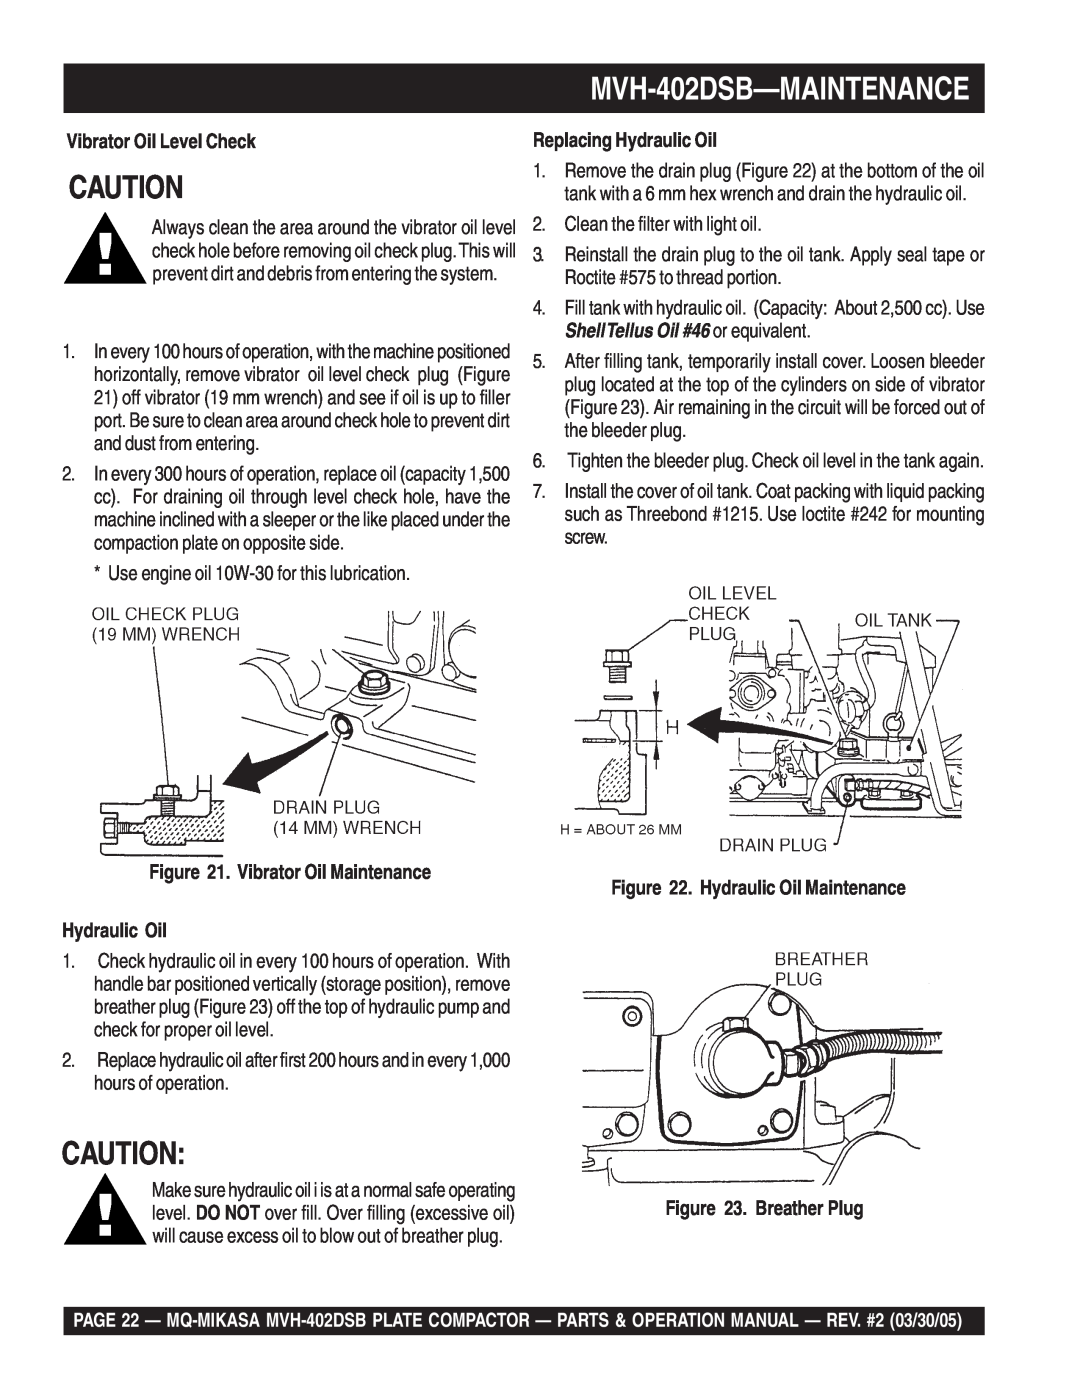 Multiquip manual MVH-402DSB-MAINTENANCE, Vibrator Oil Level Check, Vibrator Oil Maintenance Hydraulic Oil 